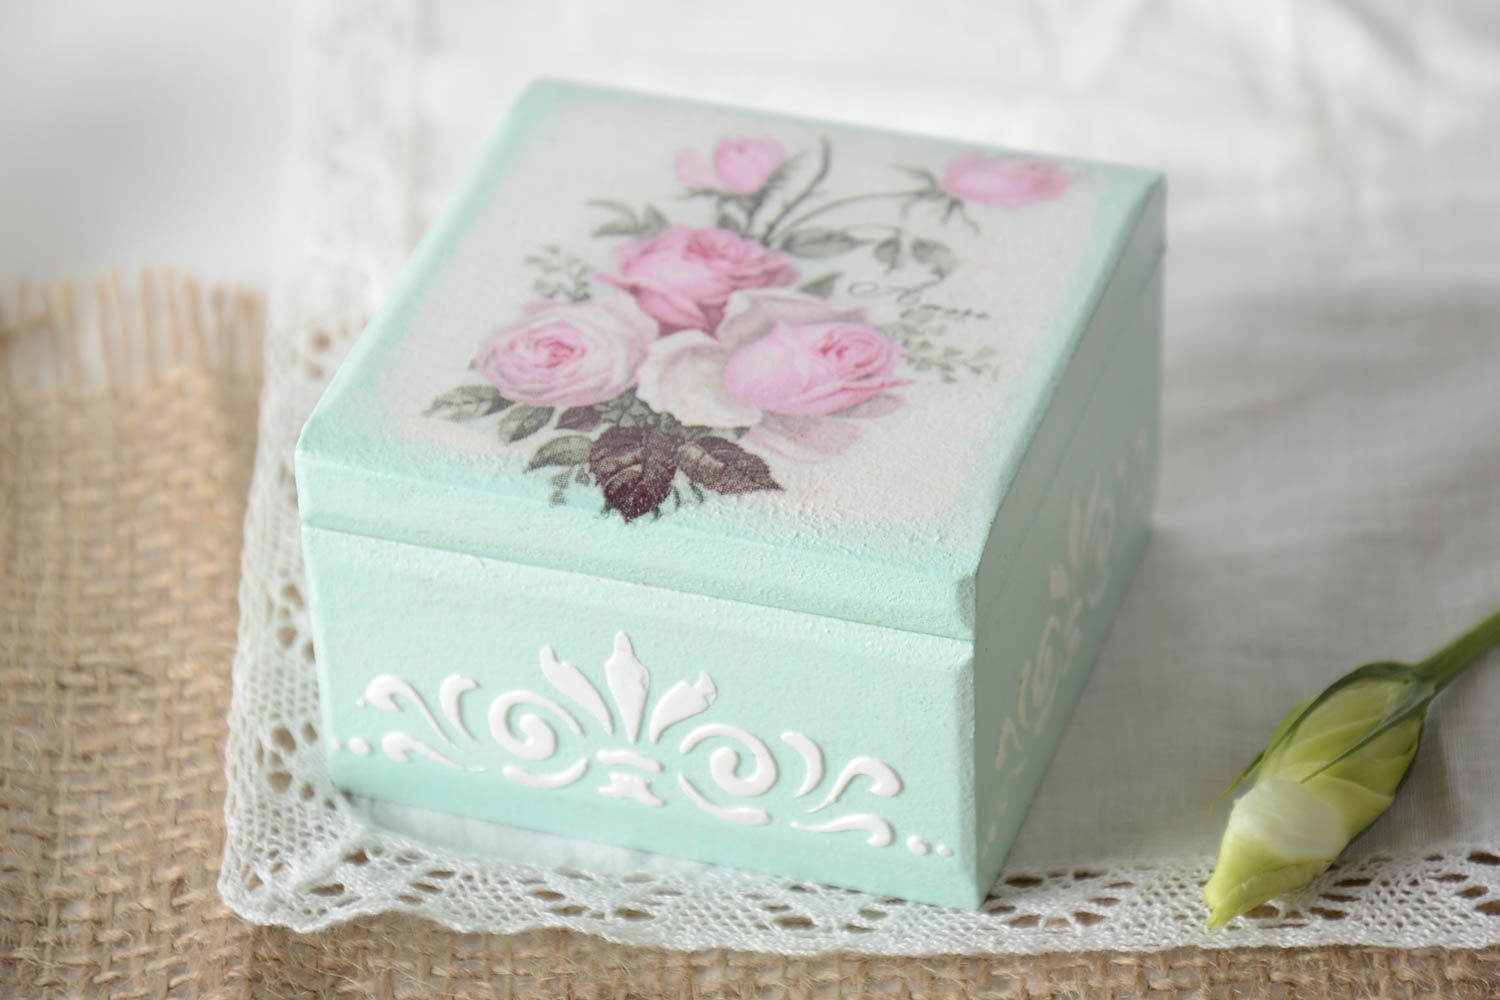 Small handmade wooden jewelry box square decoupage box designs home designs photo 1